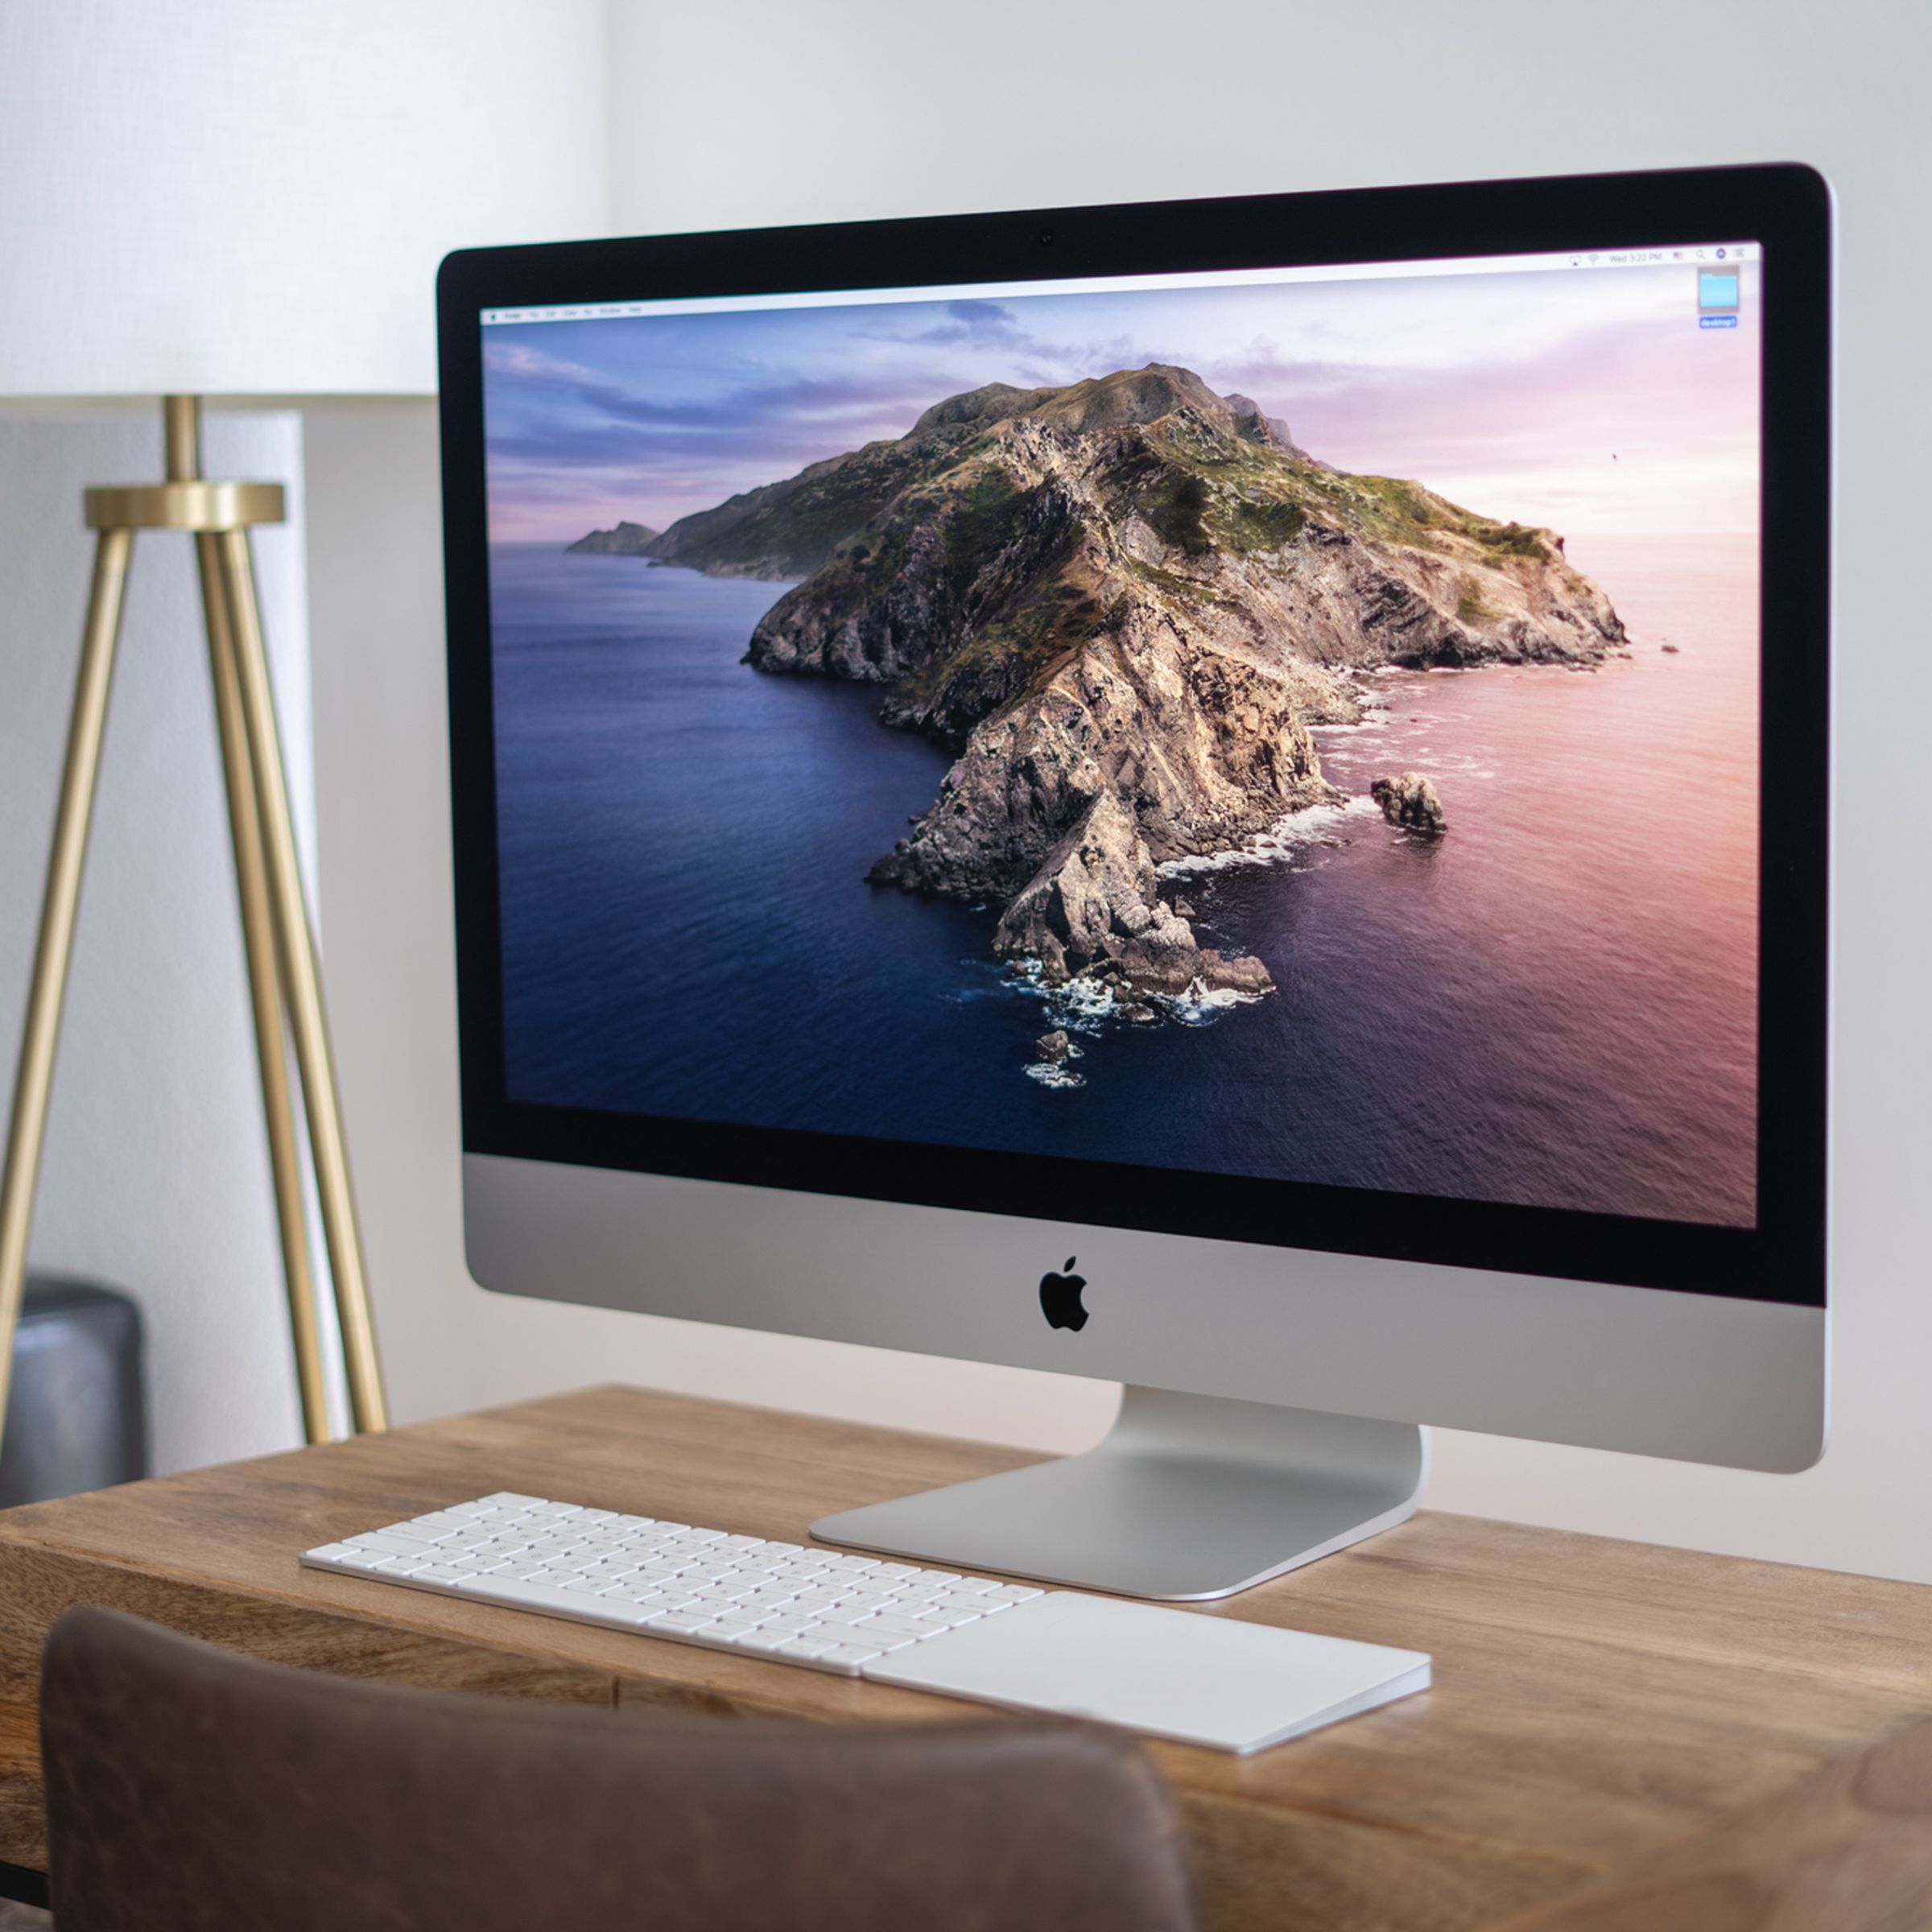 The 2020 27-inch iMac